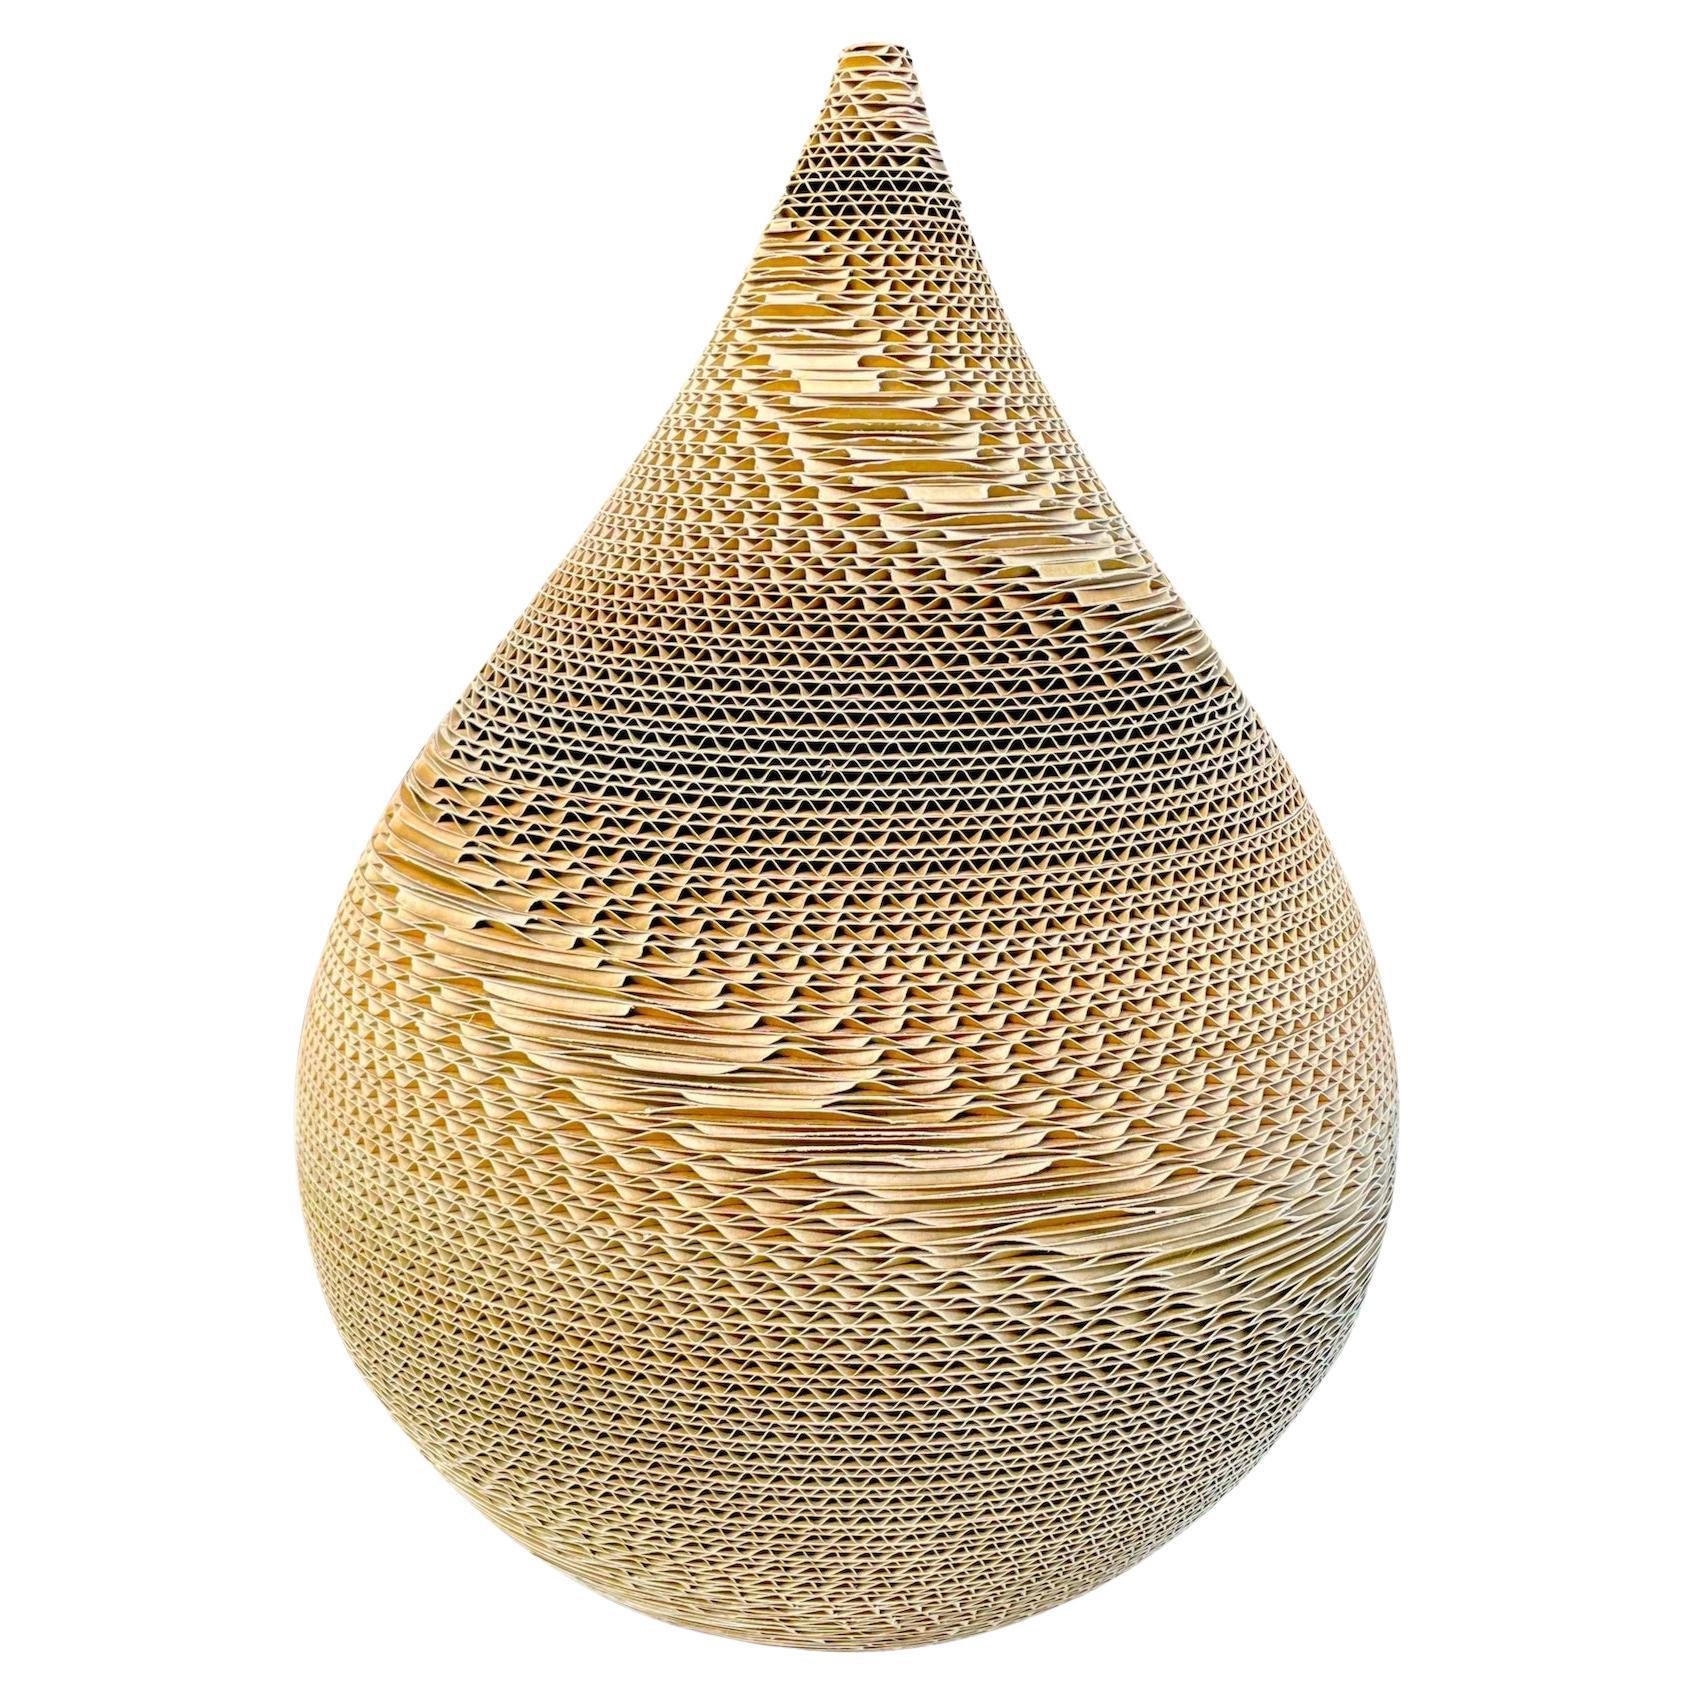 Corrugated Paper Vase Sculpture, France, Contemporary